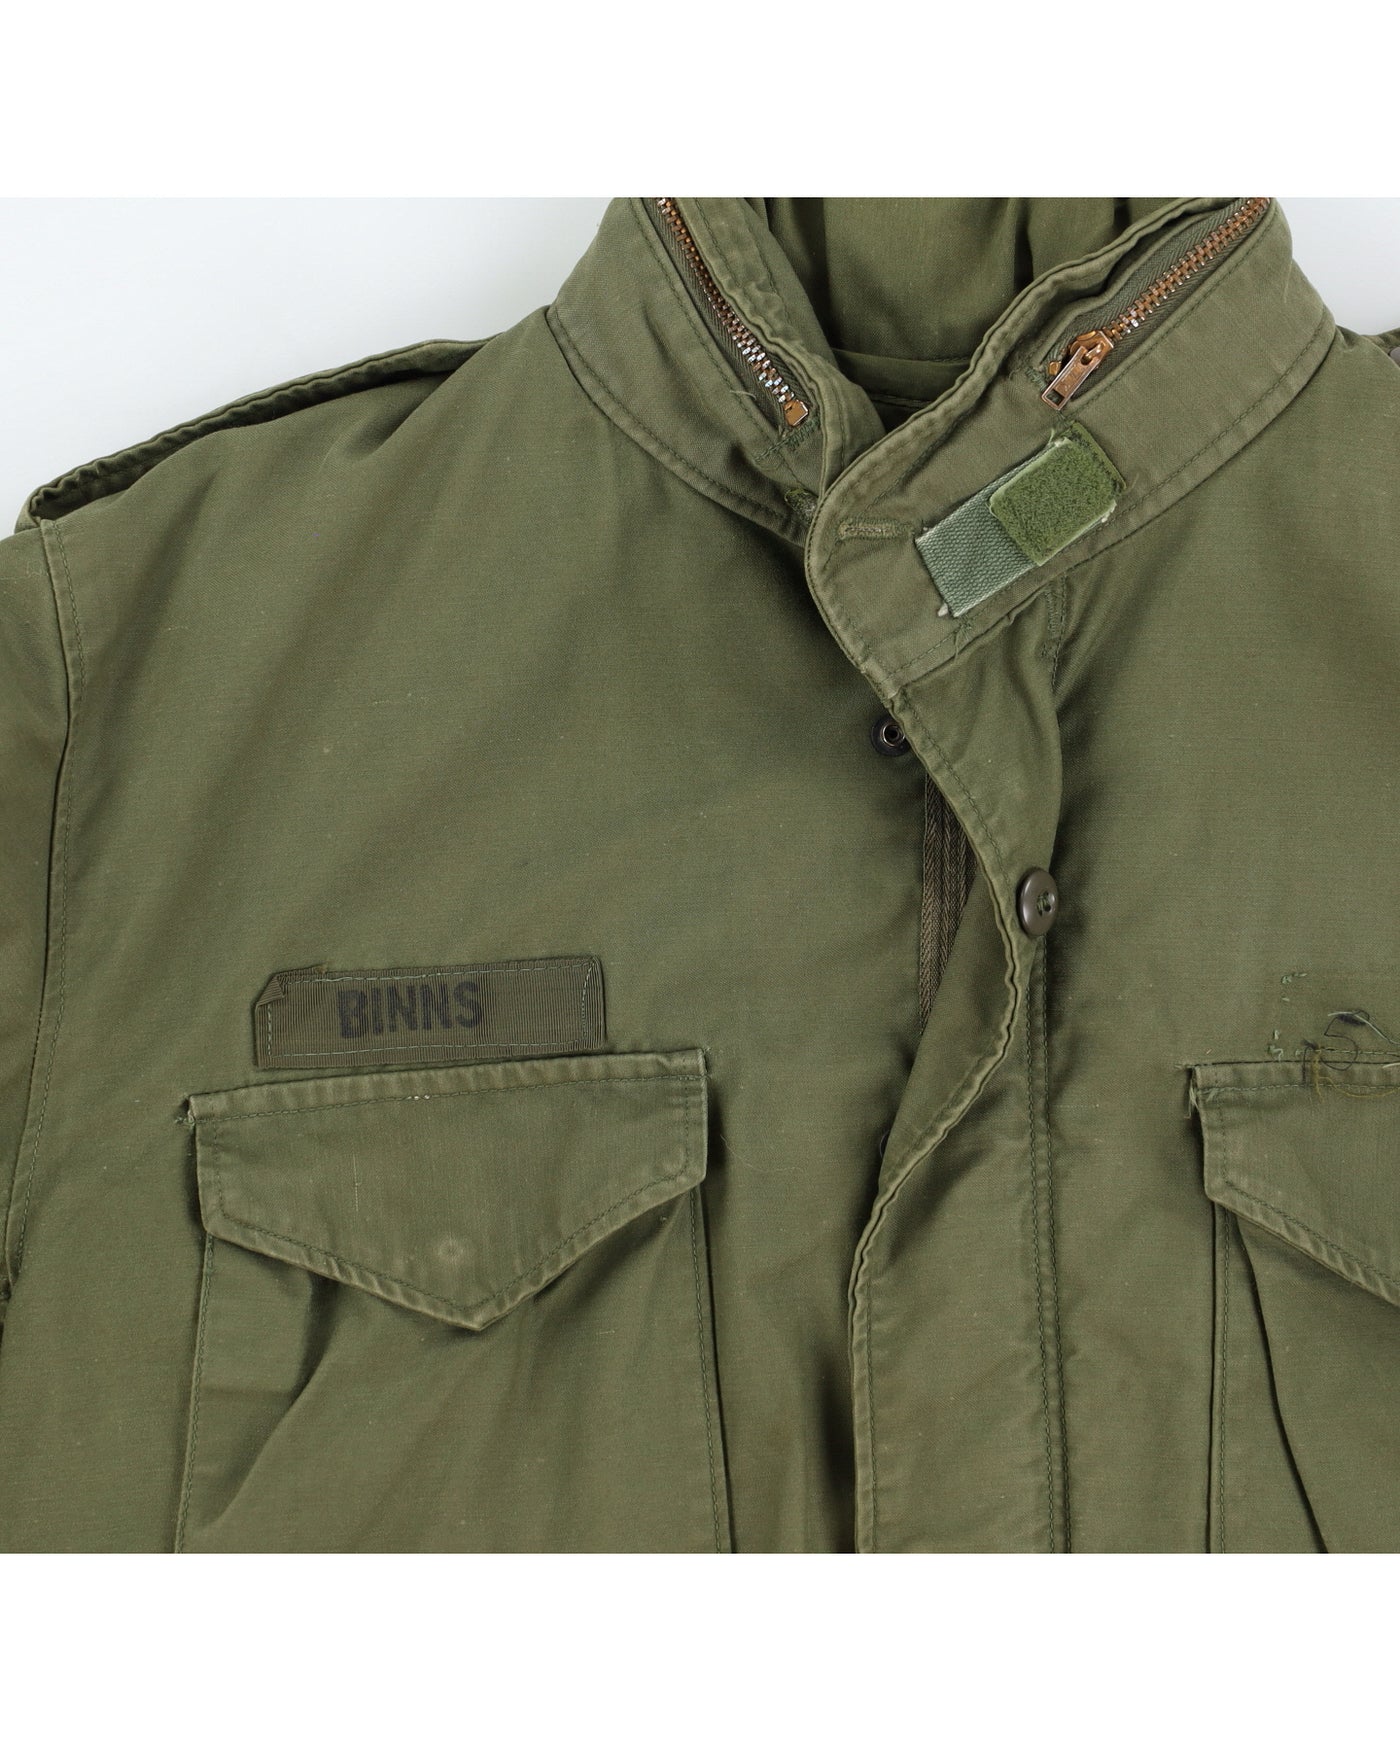 70s Vintage US Army M65 Field Jacket w/ Liner- M